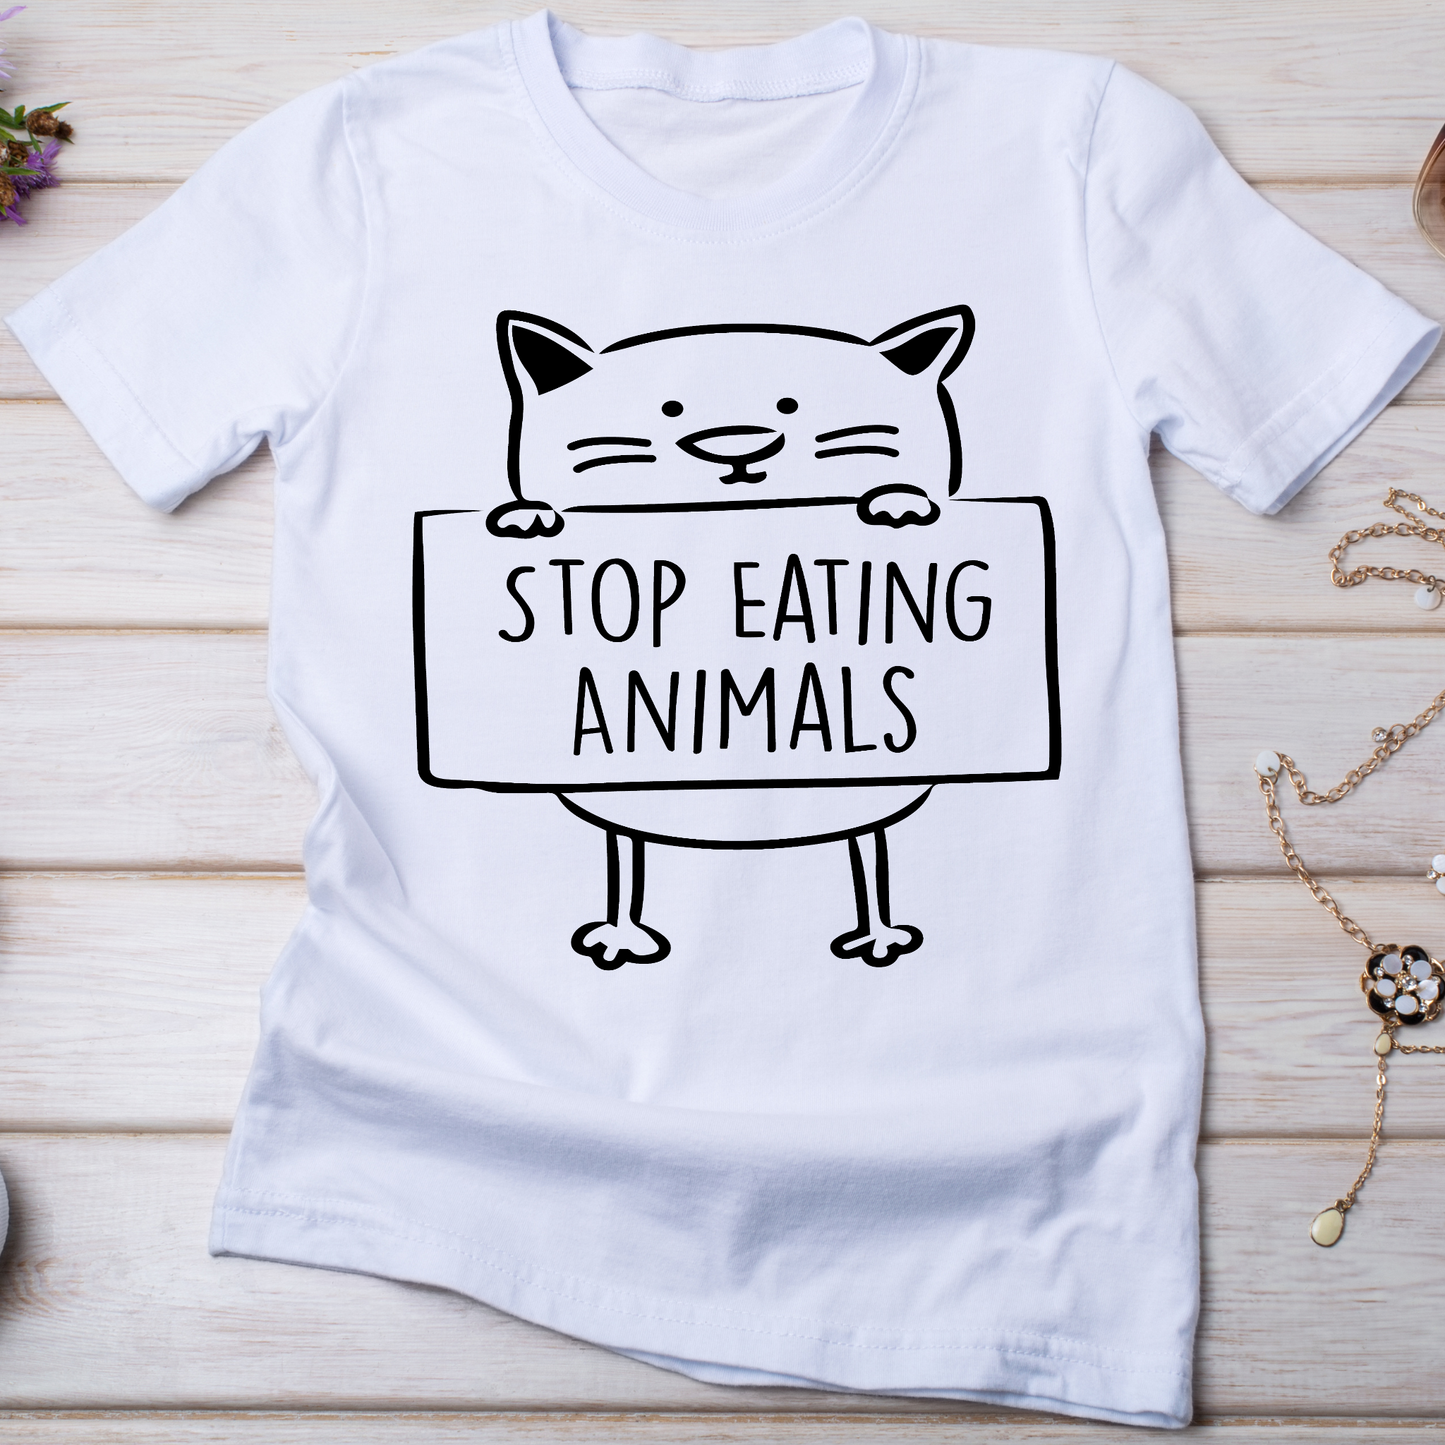 Stop eating animals Women's vegan t-shirt - Premium t-shirt from Lees Krazy Teez - Just $19.95! Shop now at Lees Krazy Teez